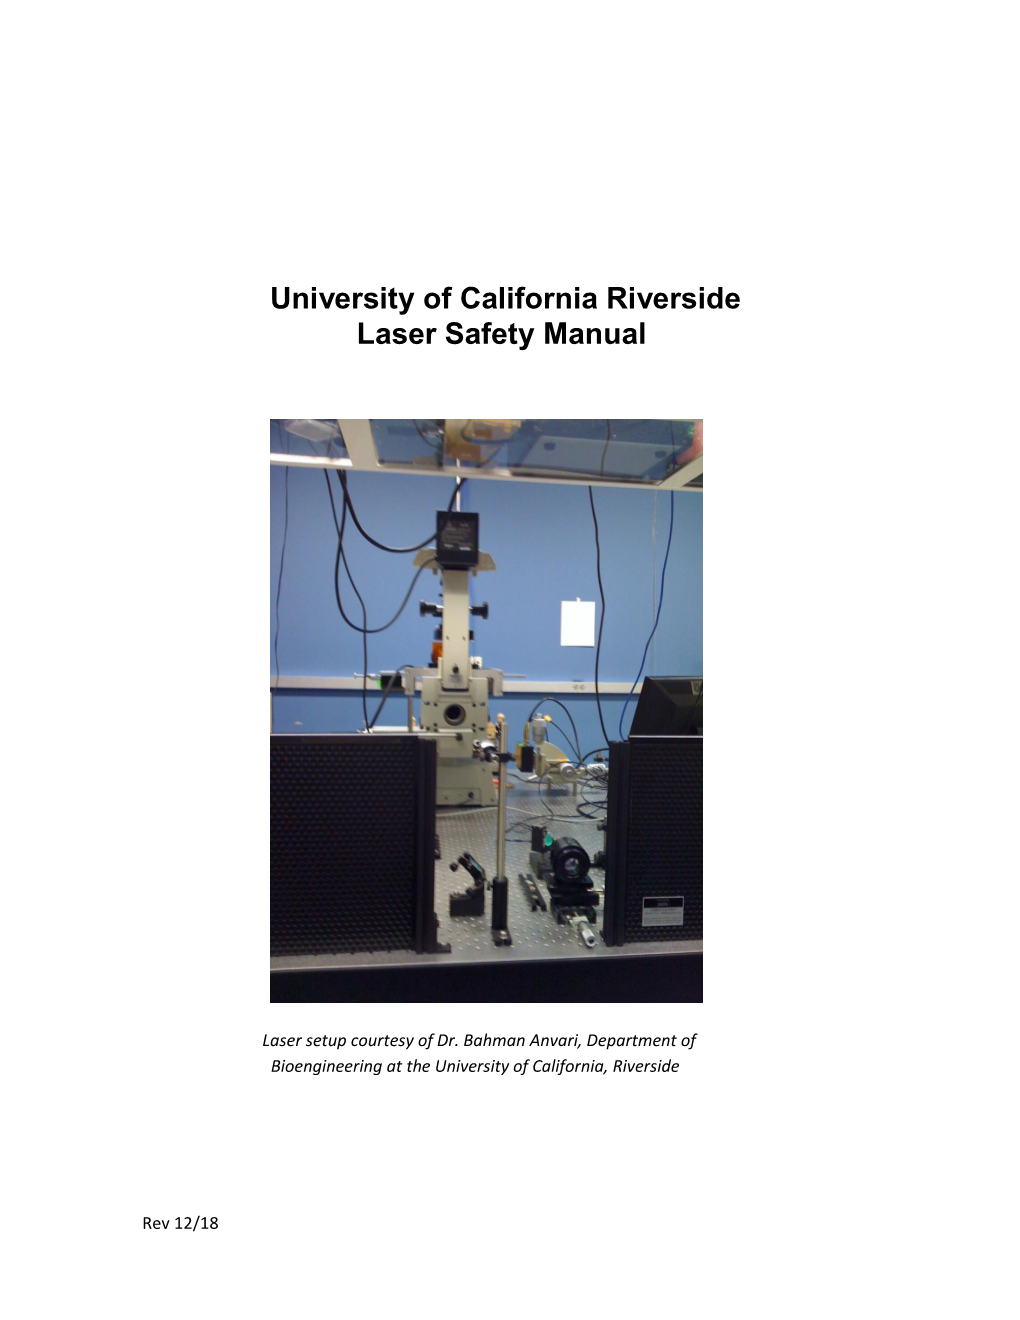 University of California Riverside Laser Safety Manual